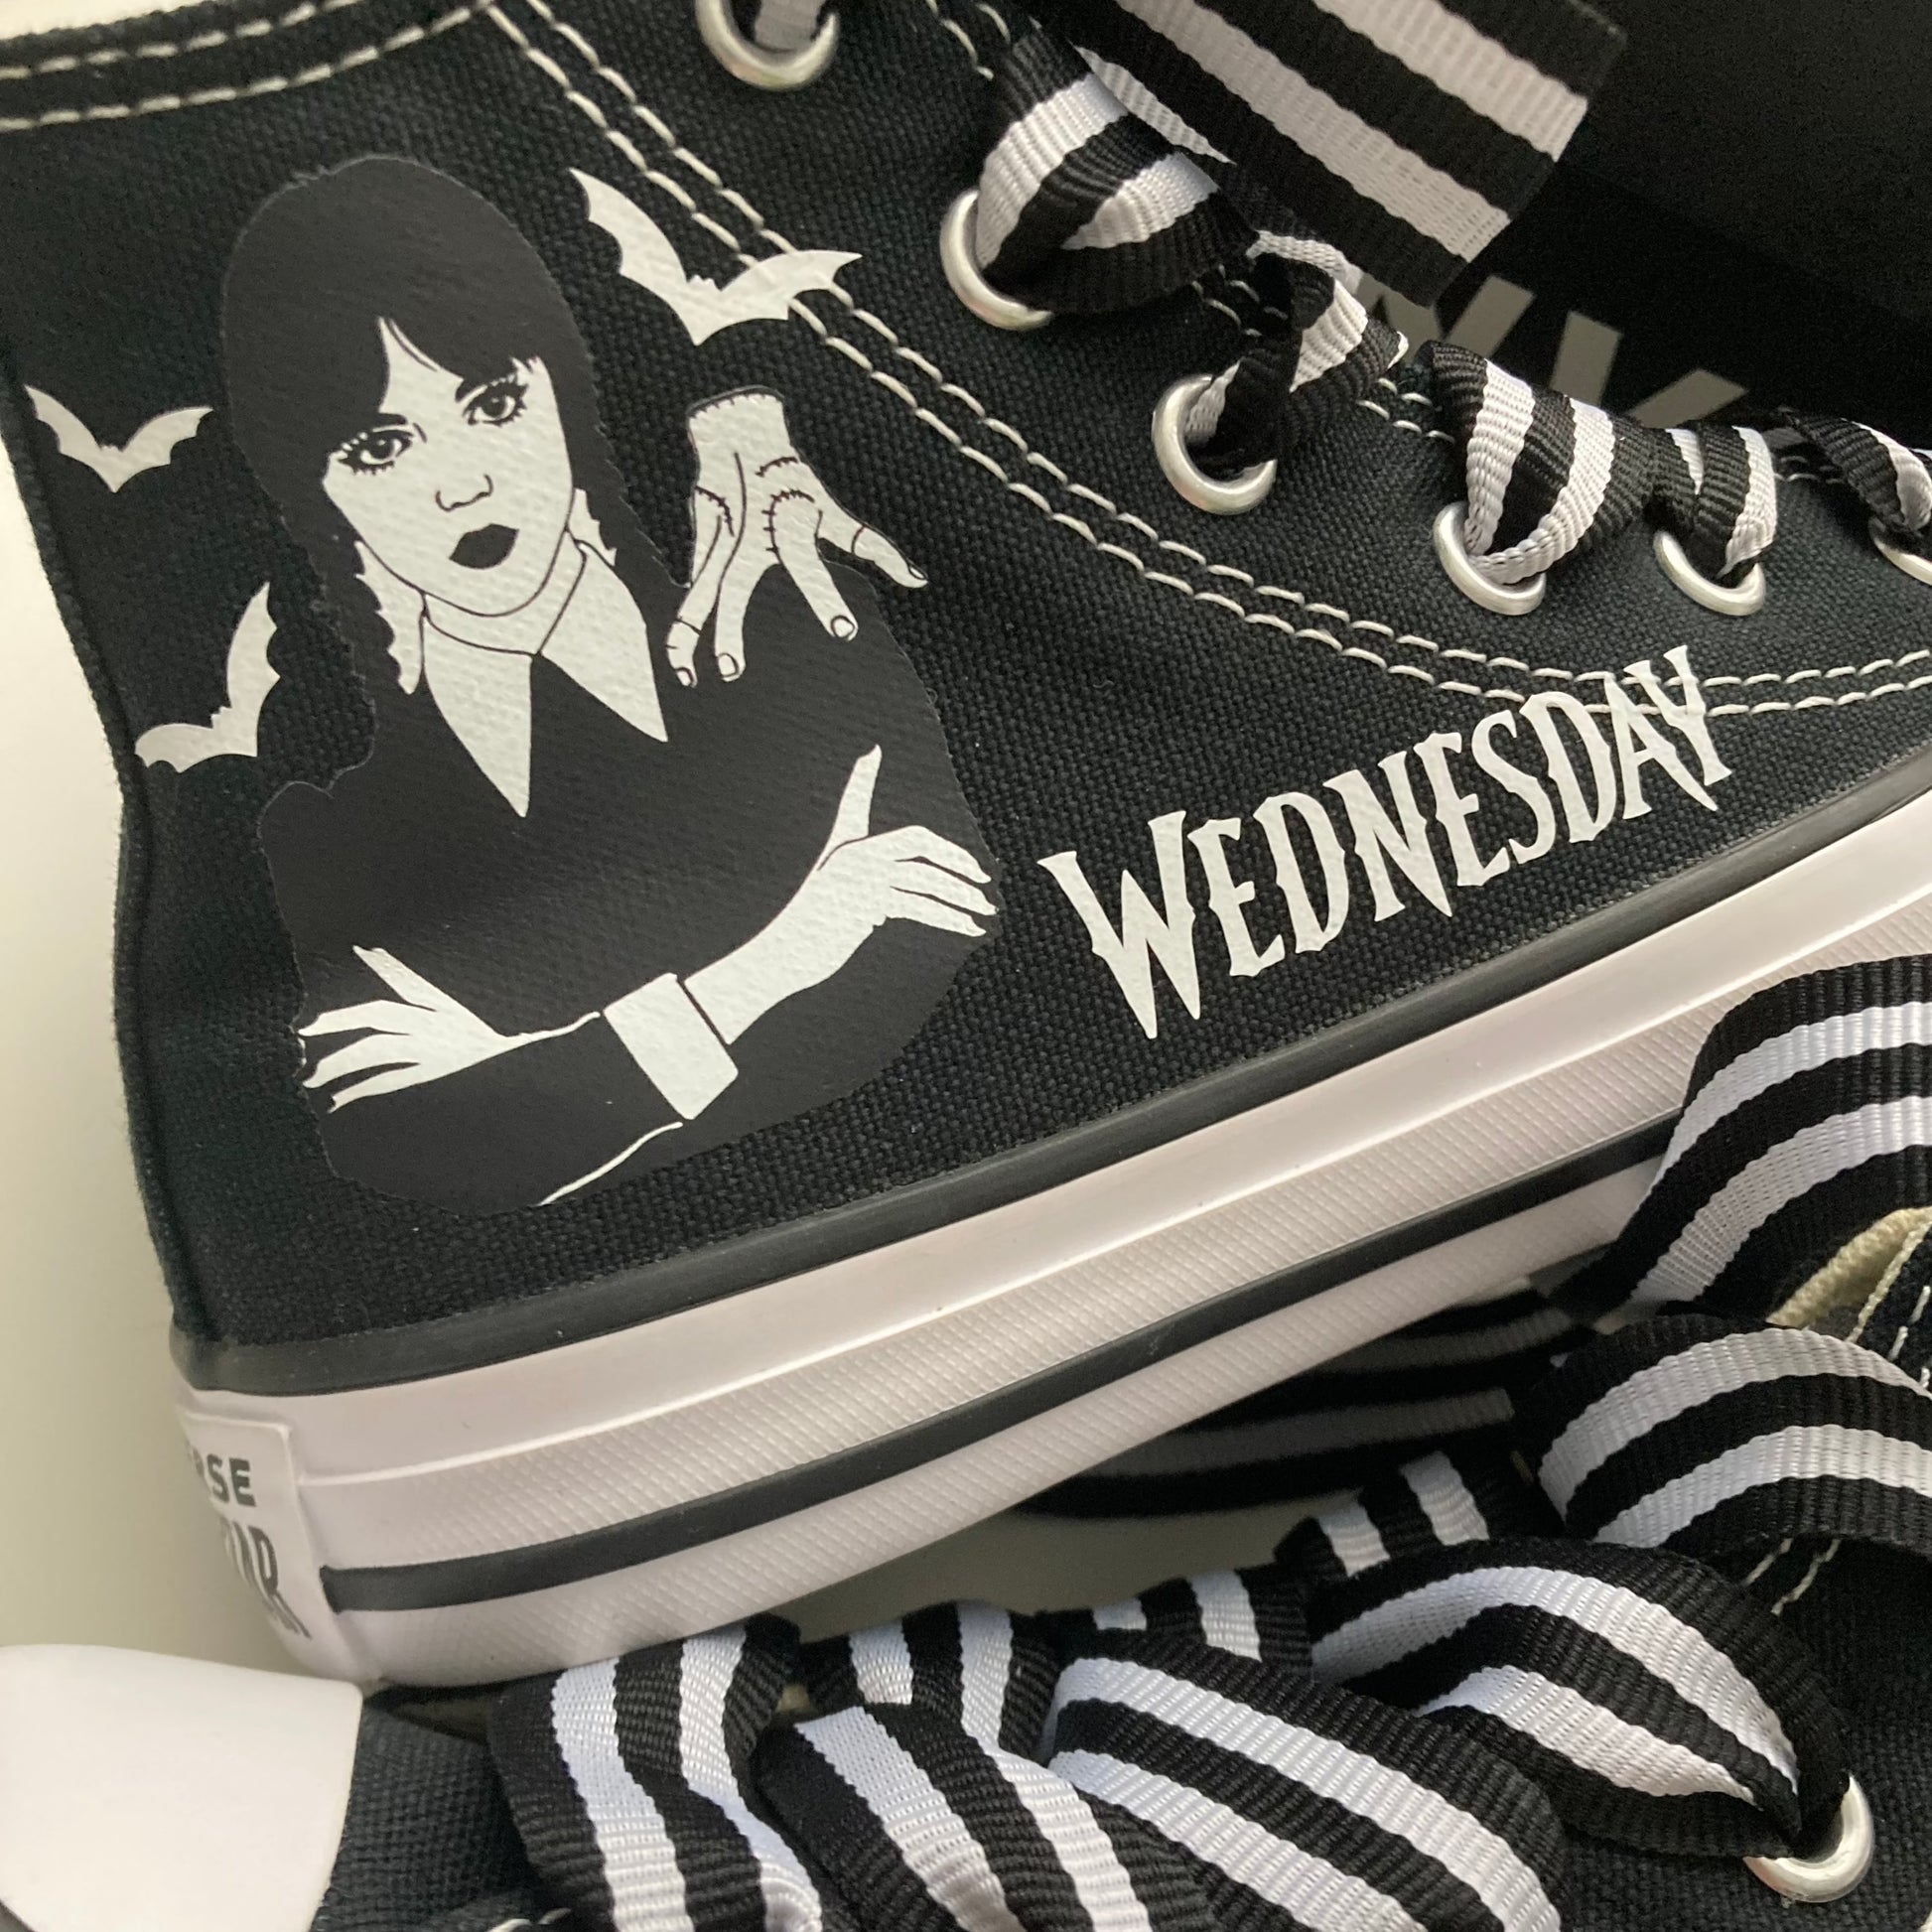 wednesday custom converse boots